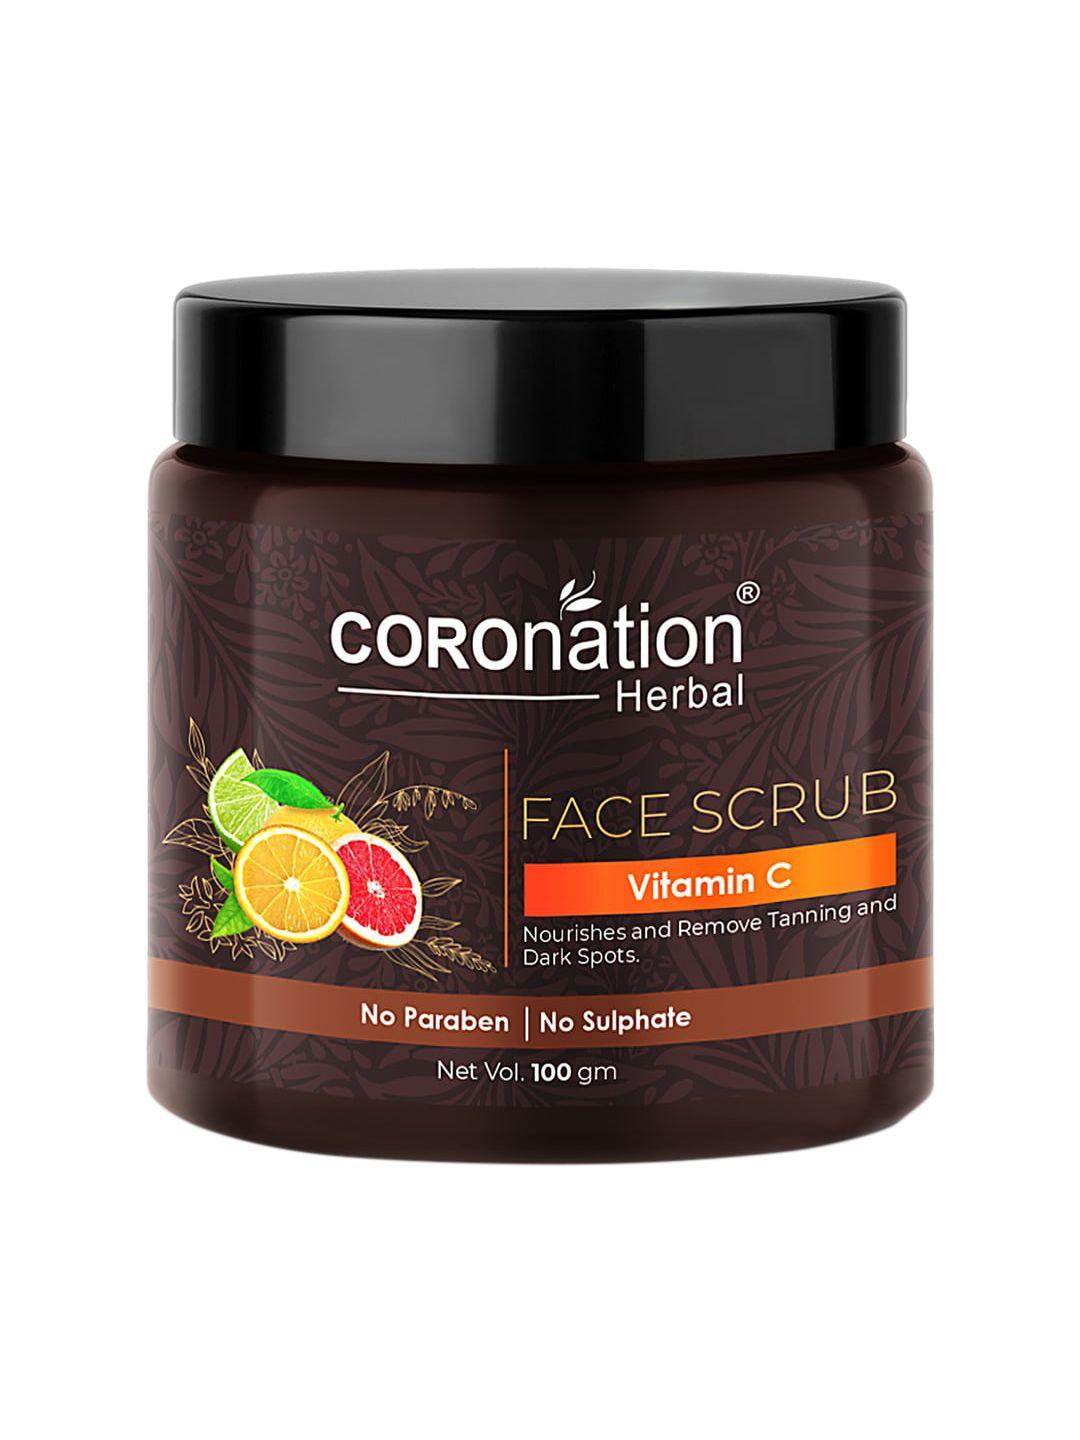 coronation herbal vitamin c face scrub with almond oil for tan & dark spots removal - 100g